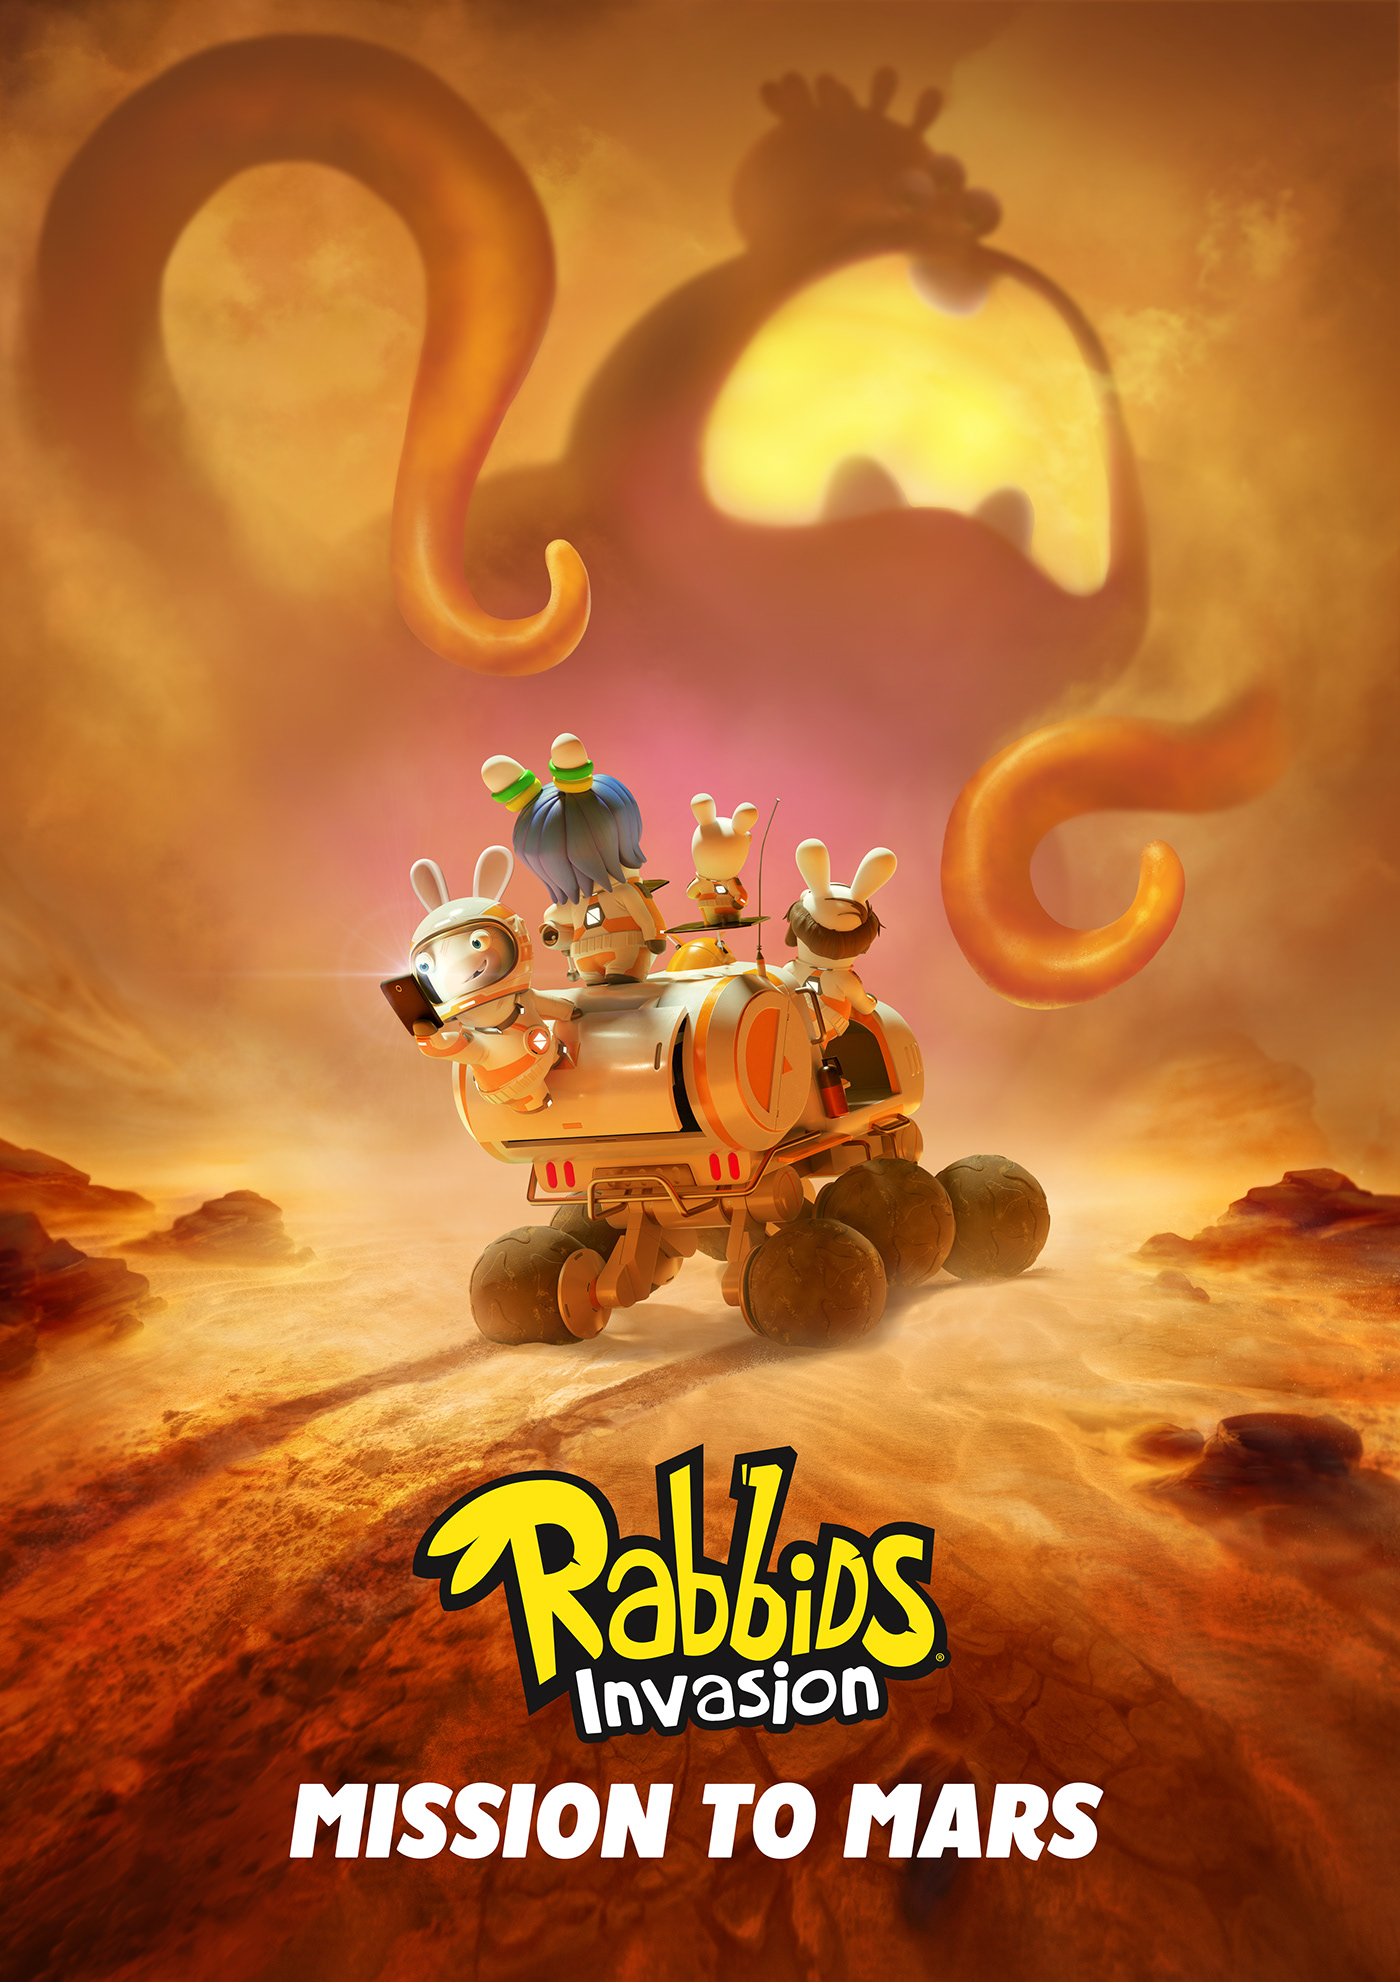 Rabbids cartoon anime tv series Fun Rabbids Invasion poster mars Space 